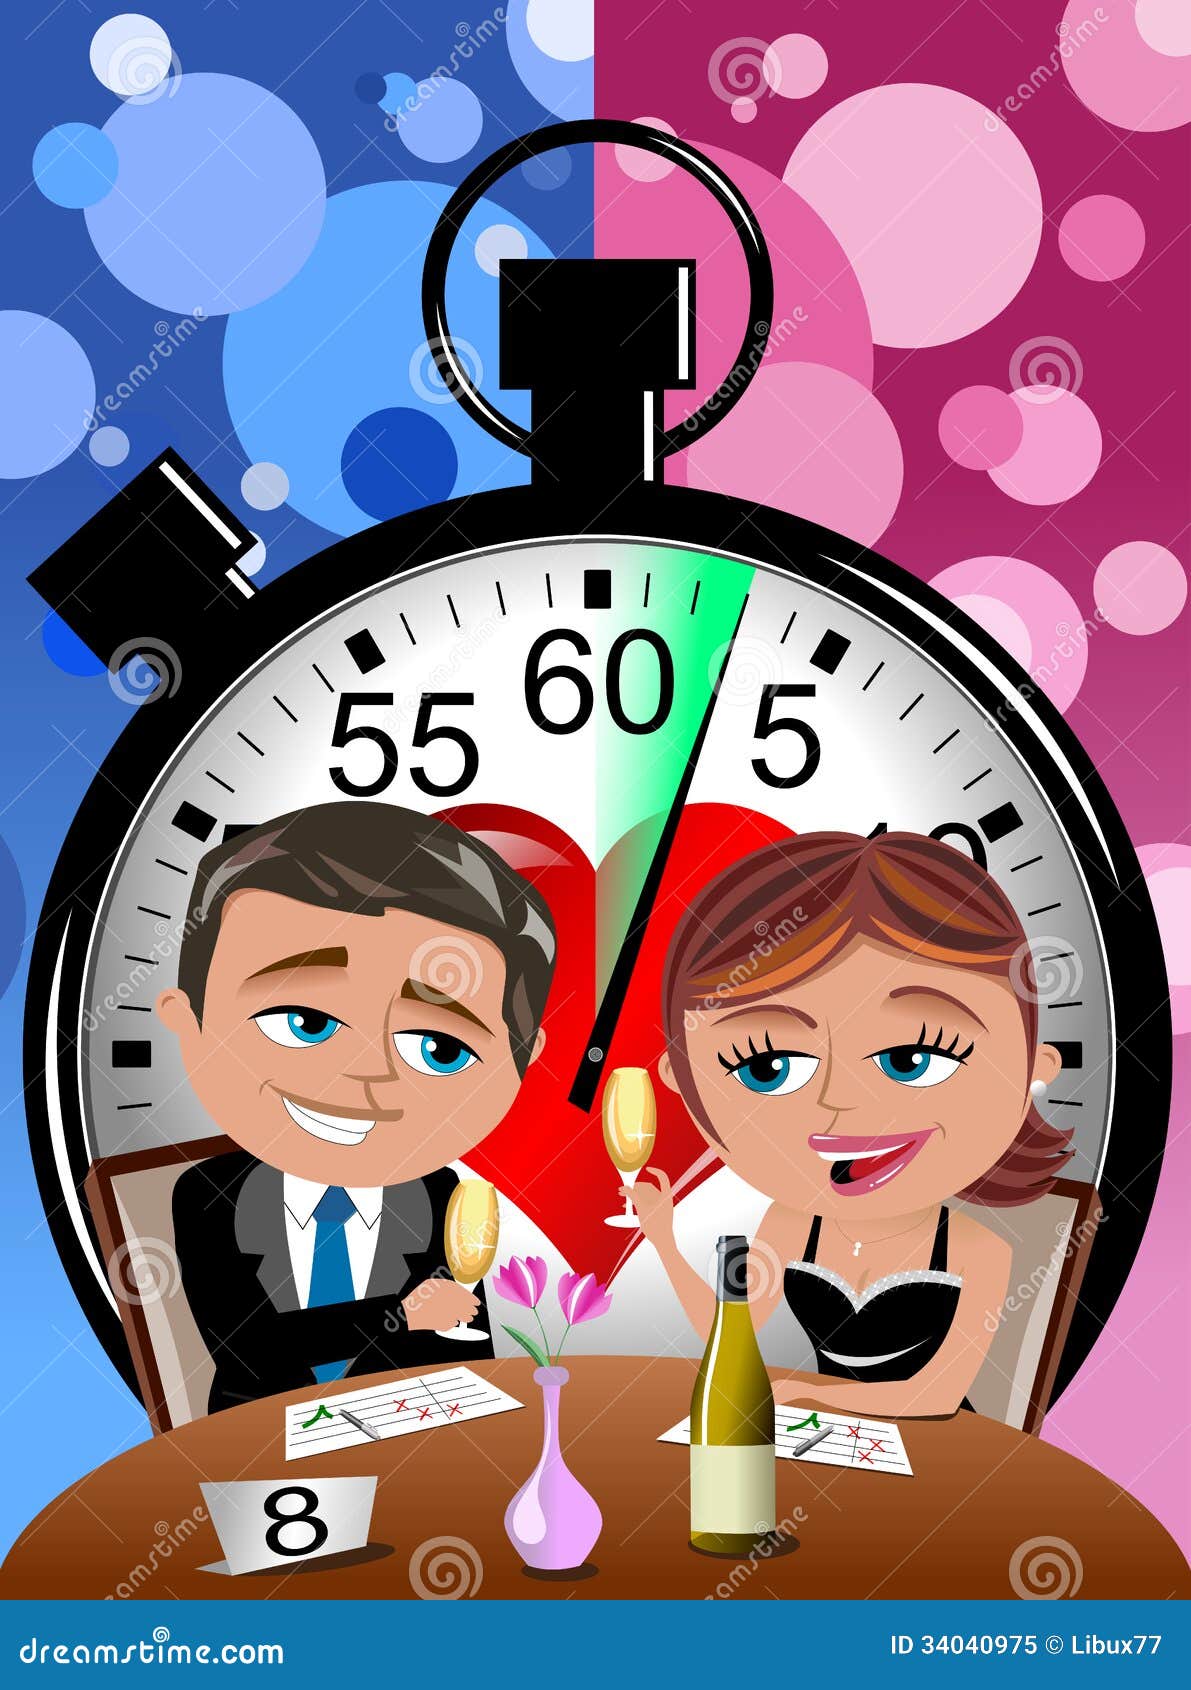 speed dating free download